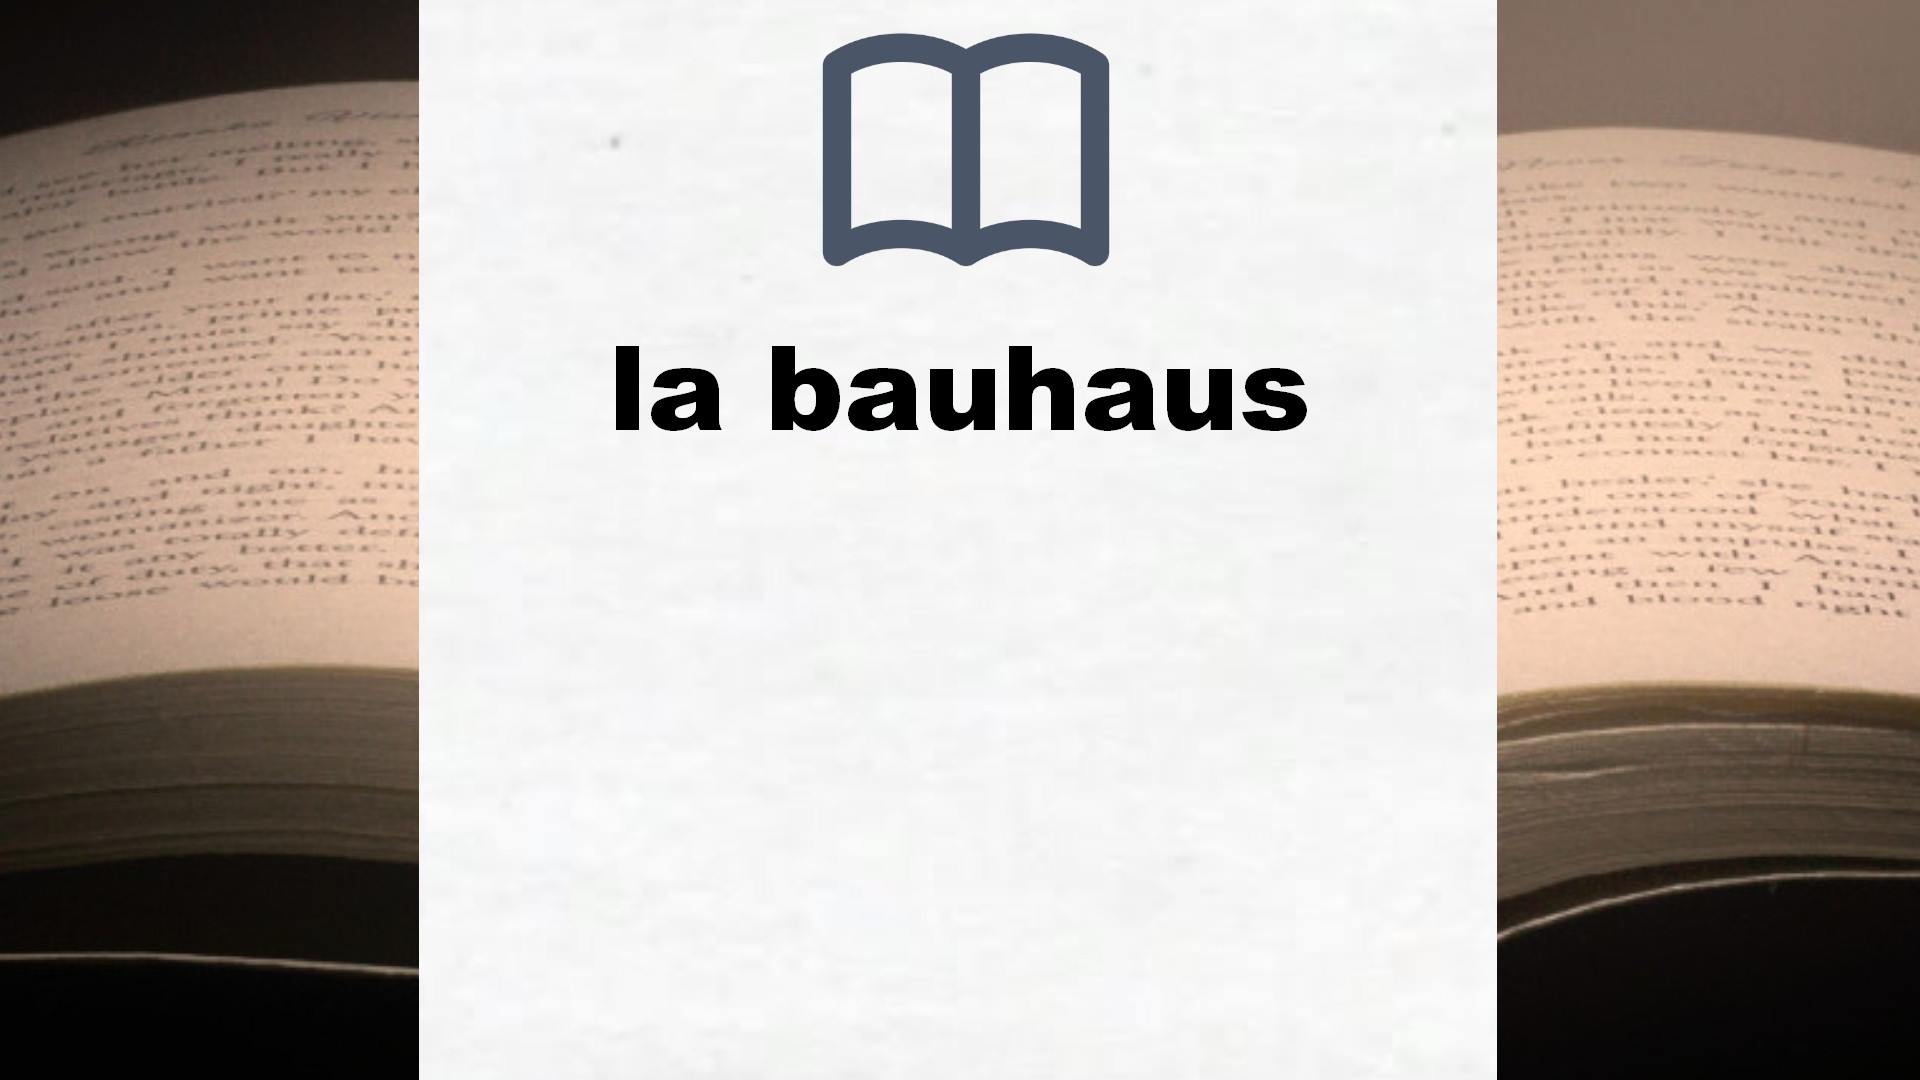 Libros sobre la bauhaus